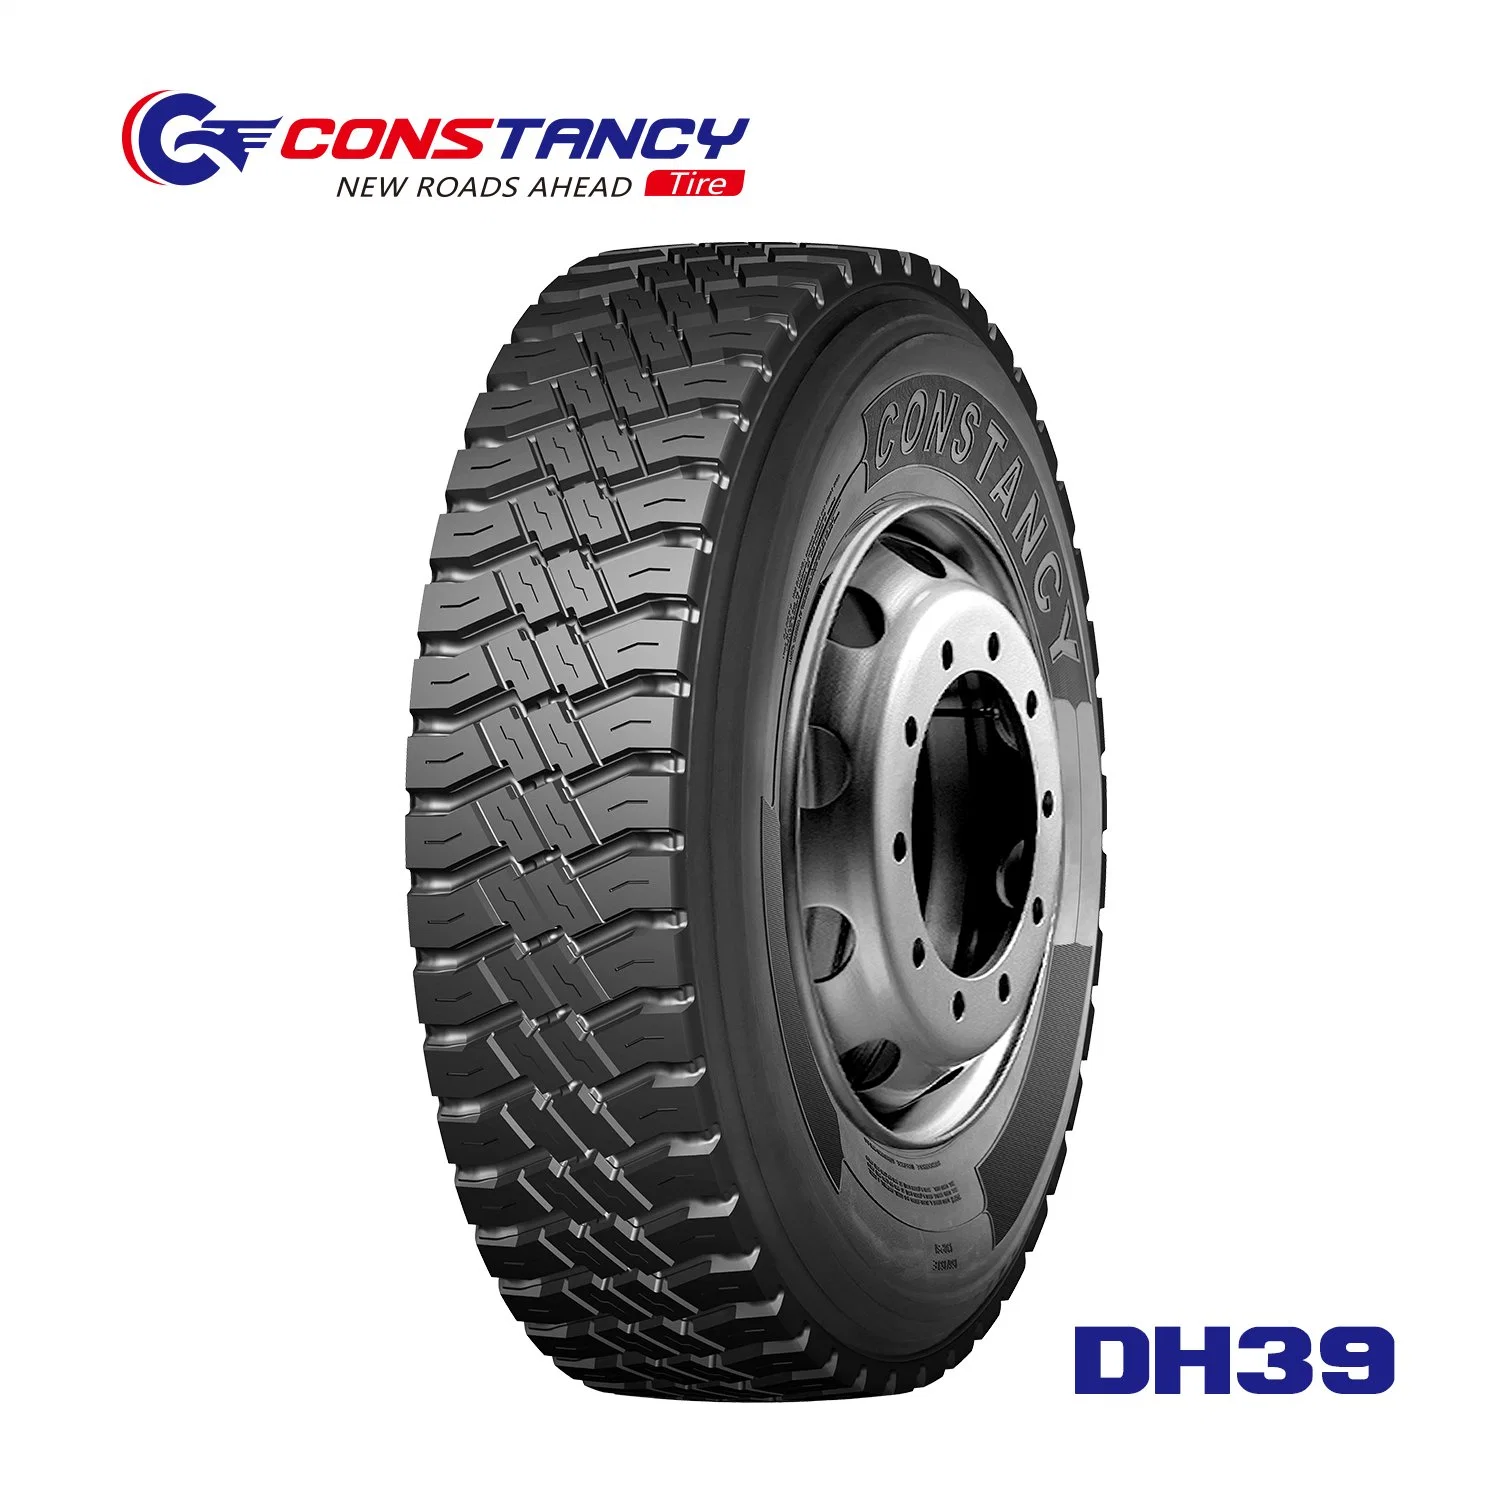 Constancy Truck Tyre, Light Truck, Steer and Trailer Tyre FC33 (235/75r17.5)